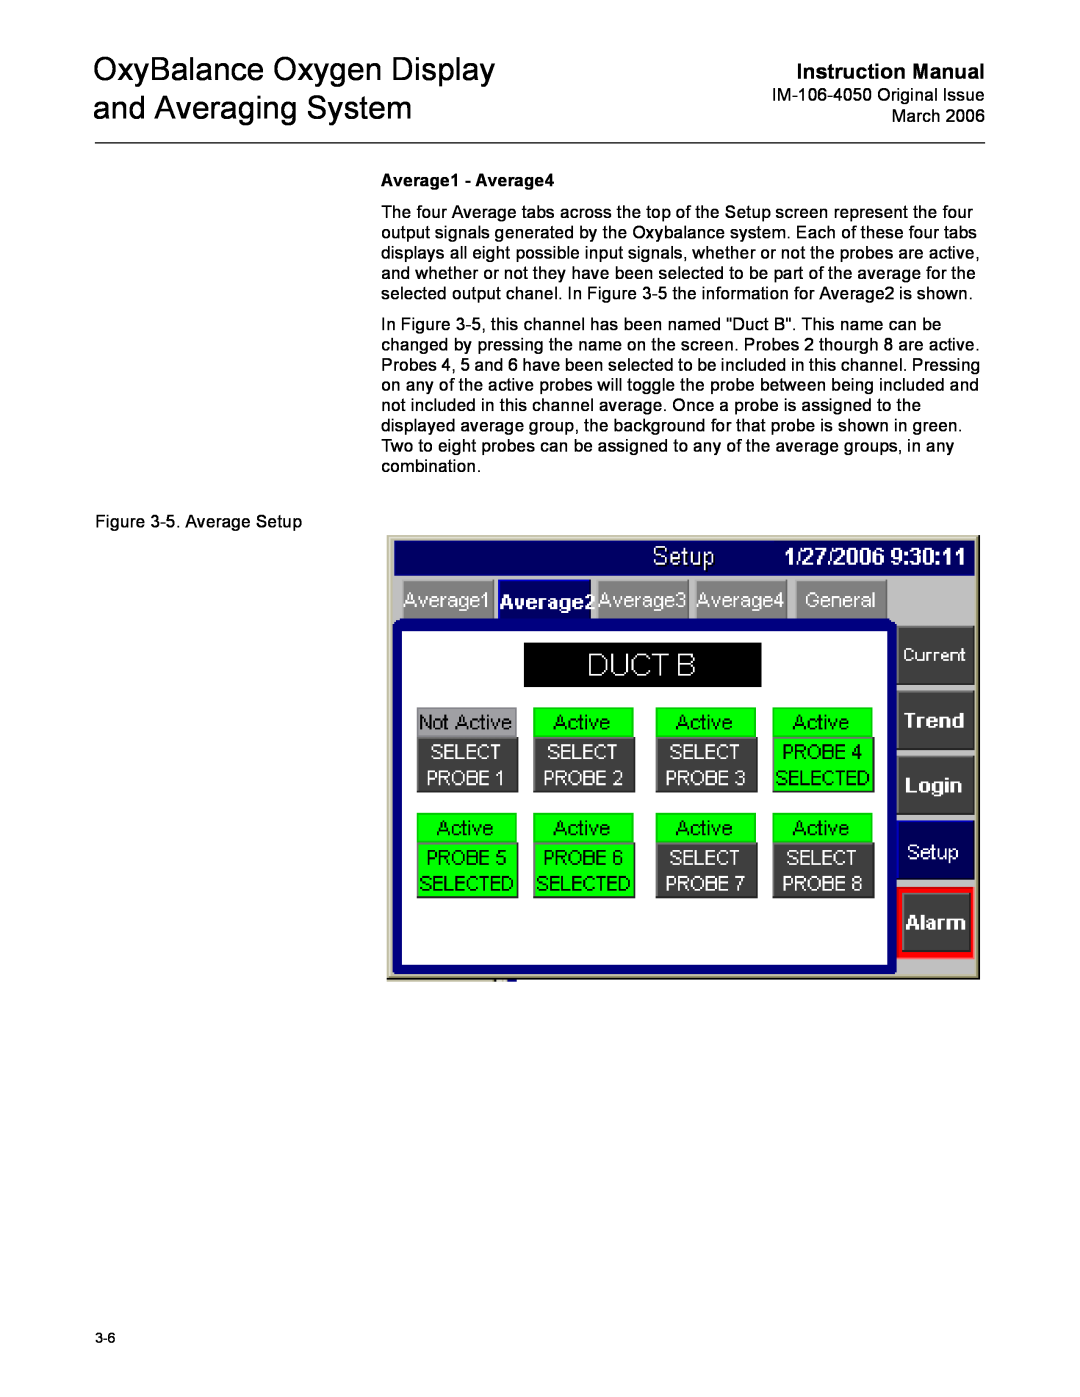 Emerson IM-106-4050 Average1 - Average4, OxyBalance Oxygen Display and Averaging System, Instruction Manual 